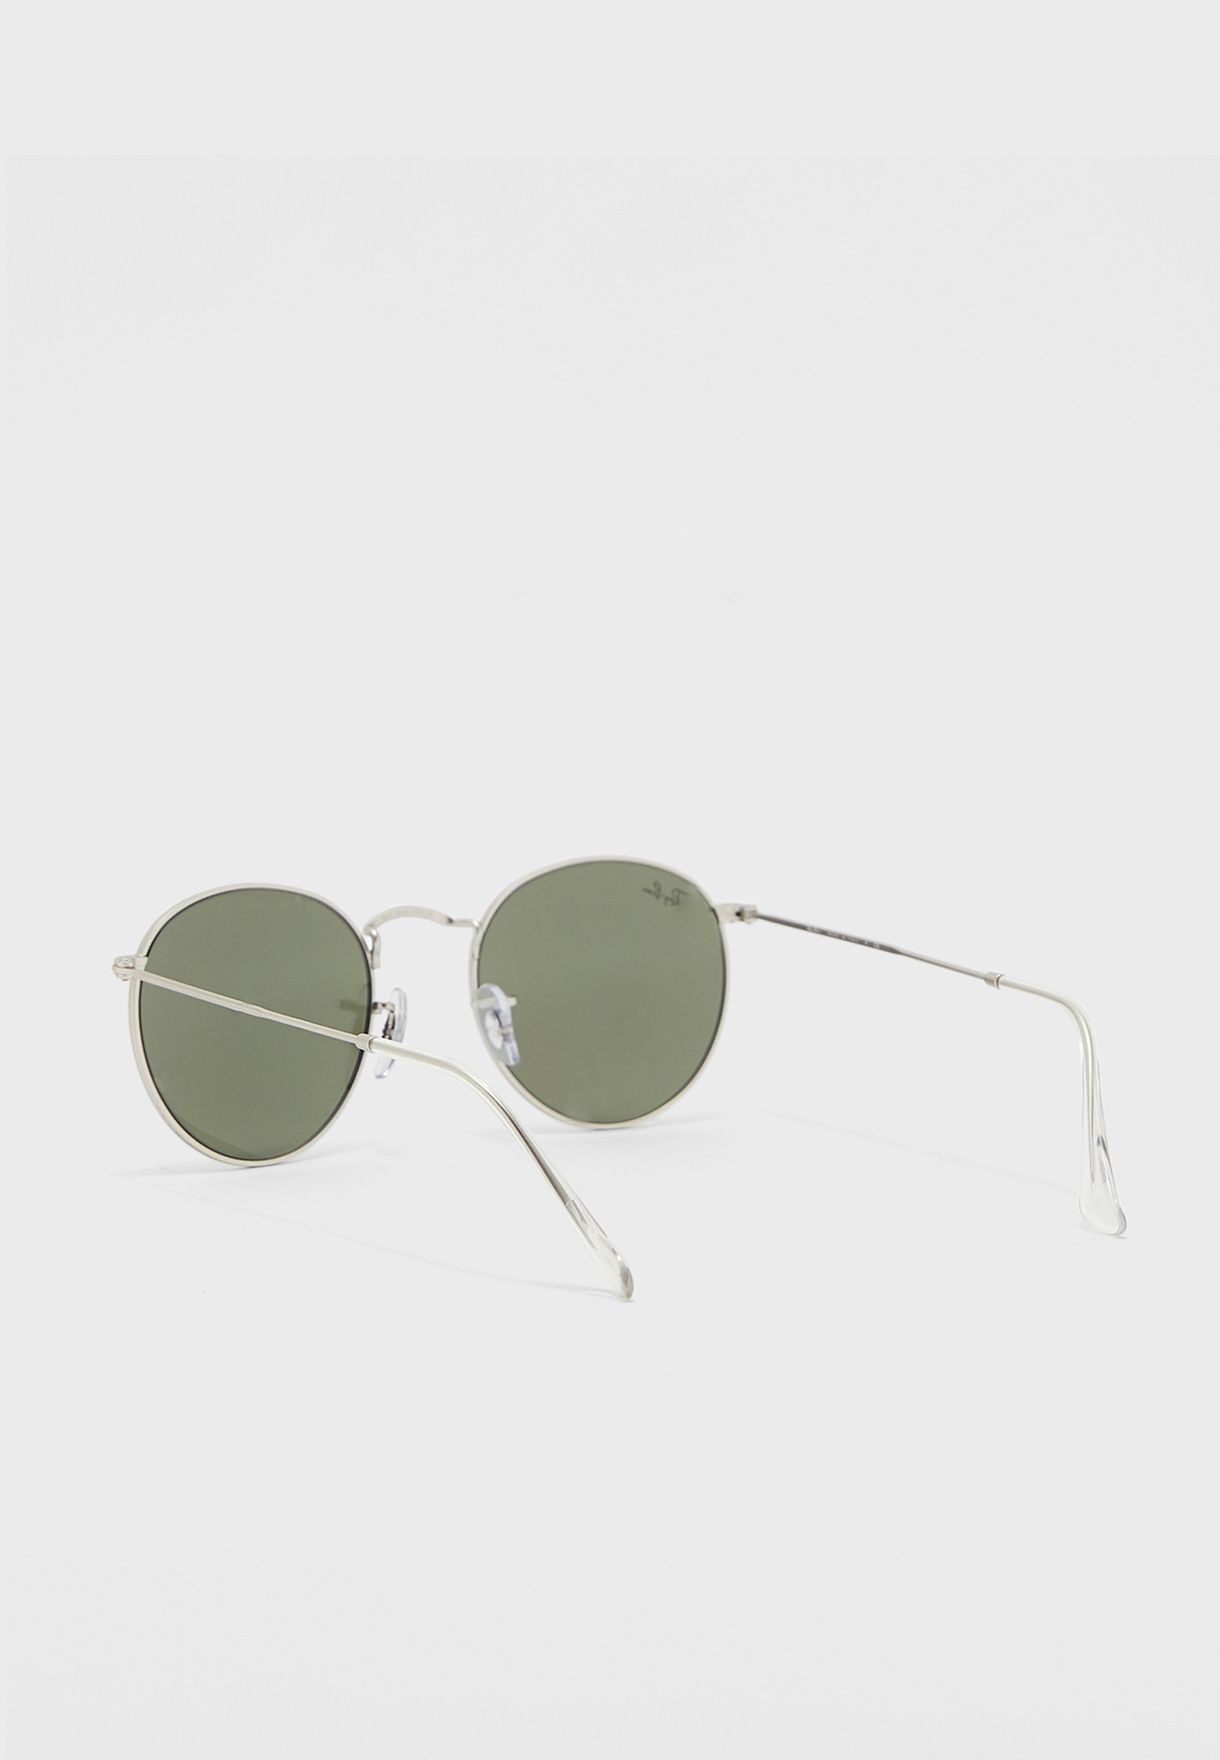 0Rb3447 Round Sunglasses